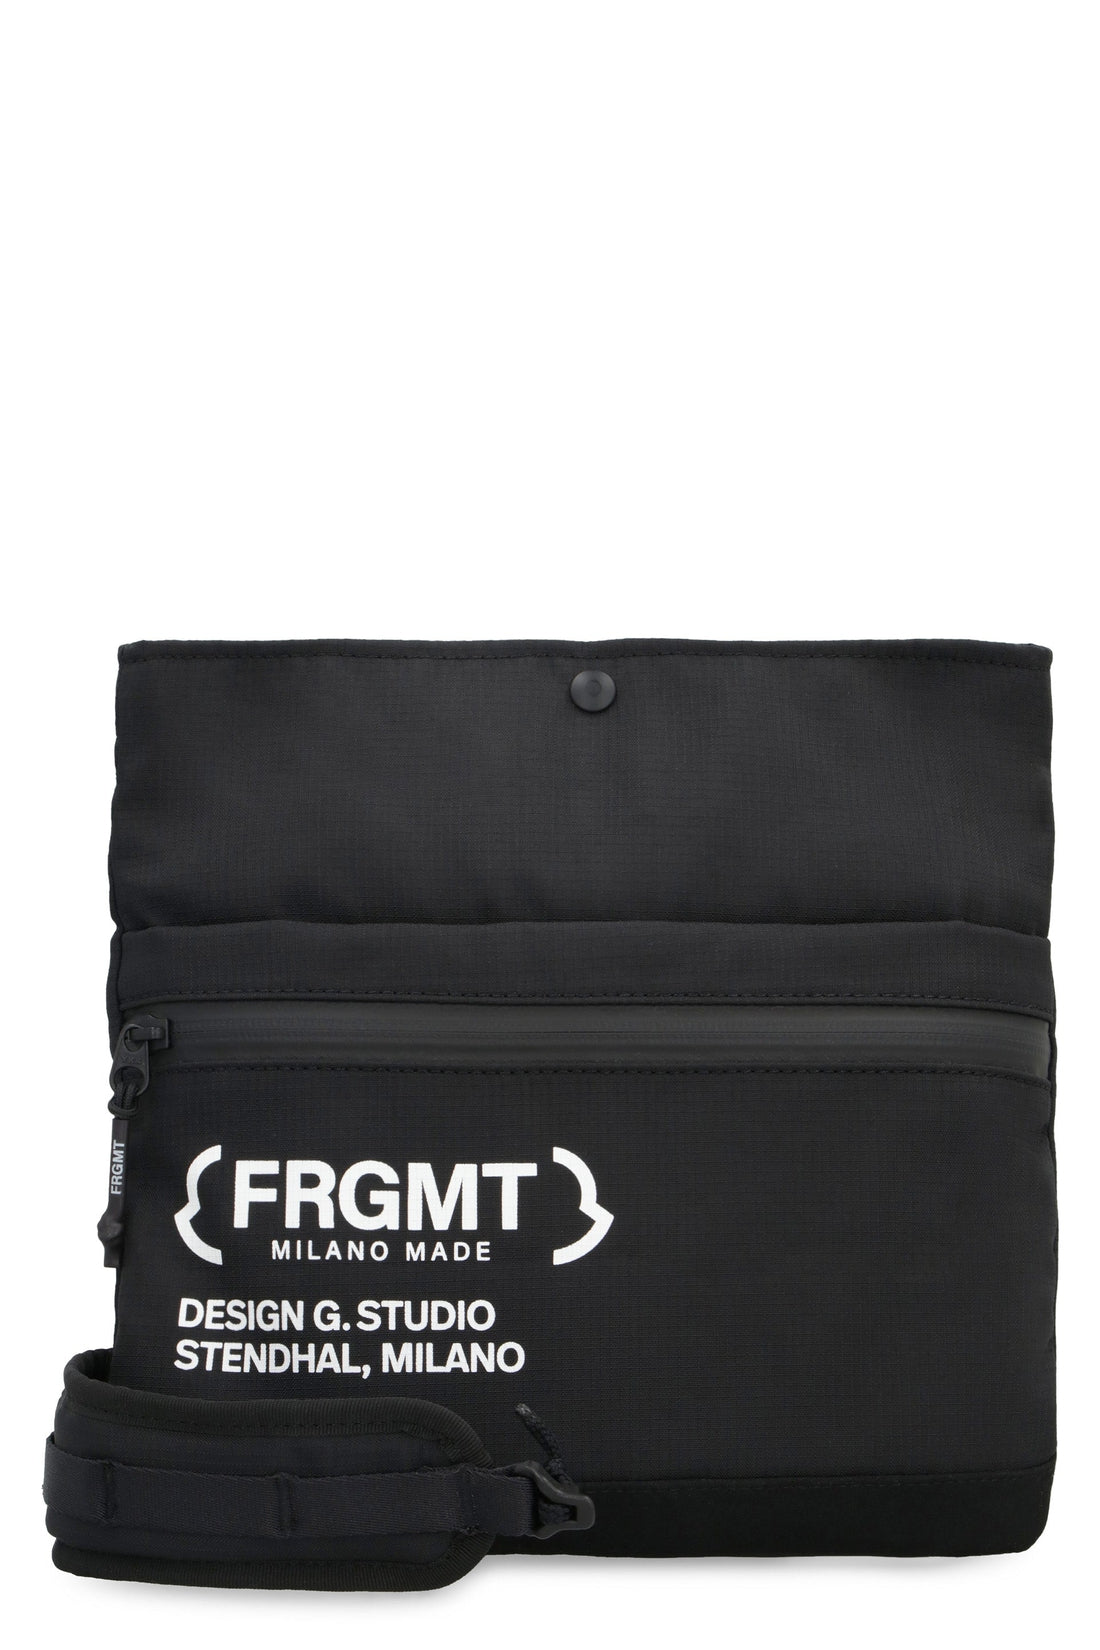 Moncler Genius-OUTLET-SALE-7 Moncler FRGMT Hiroshi Fujiwara - Sacoche nylon messenger bag-ARCHIVIST